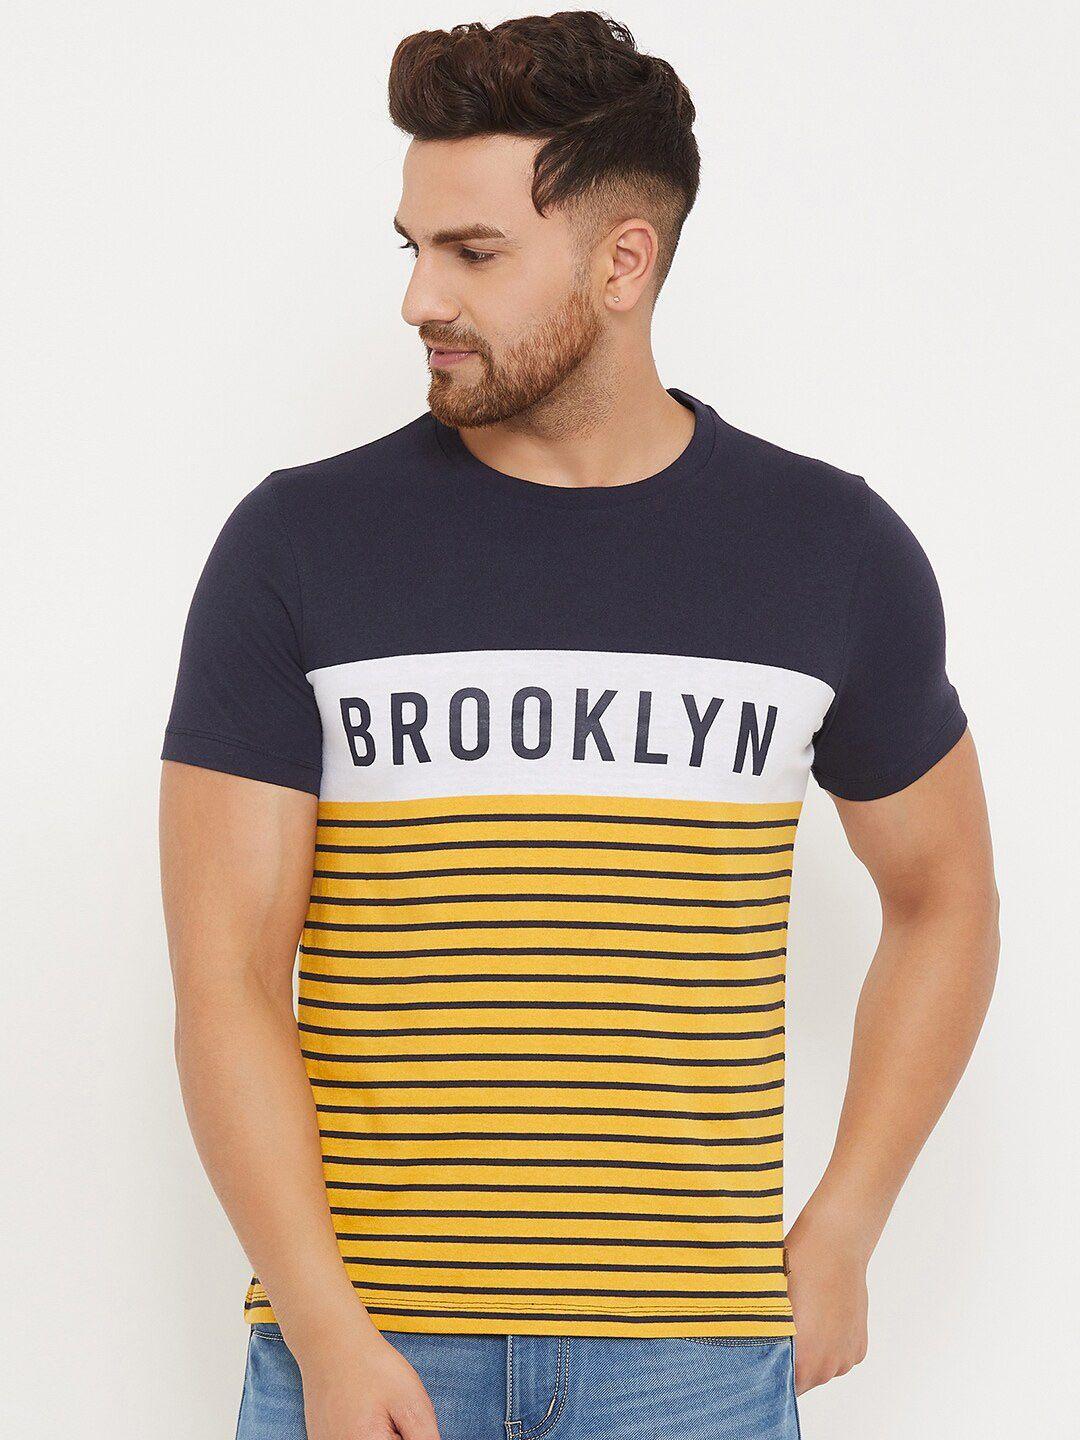 austin wood men yellow & blue striped t-shirt